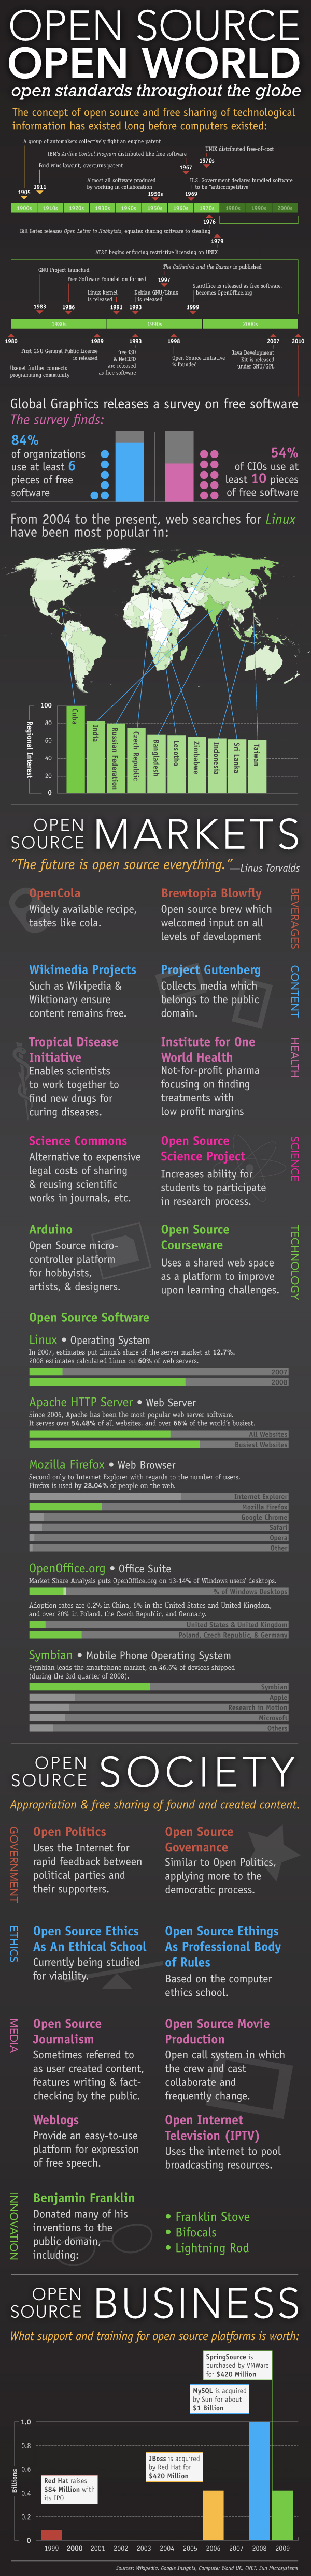 Open Source - Open World, by Focus Editors